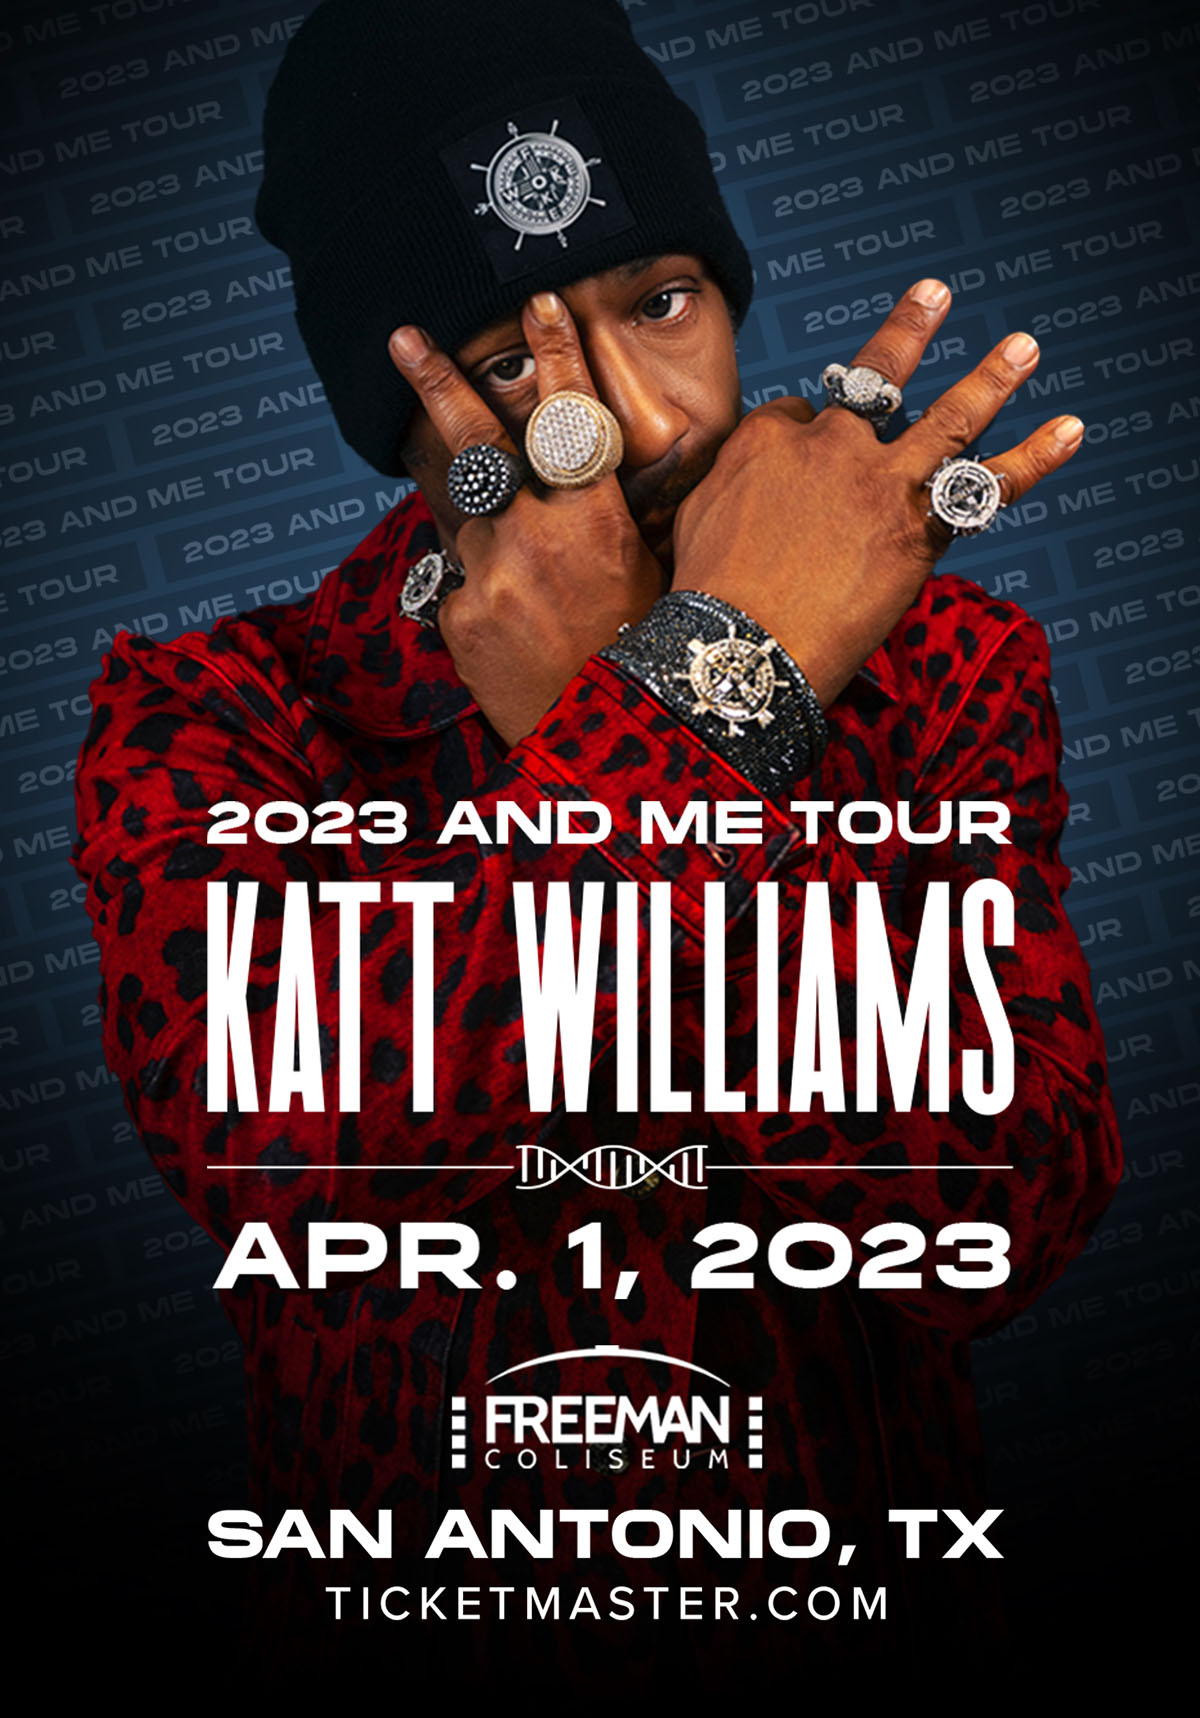 katt williams tour 2023 schedule